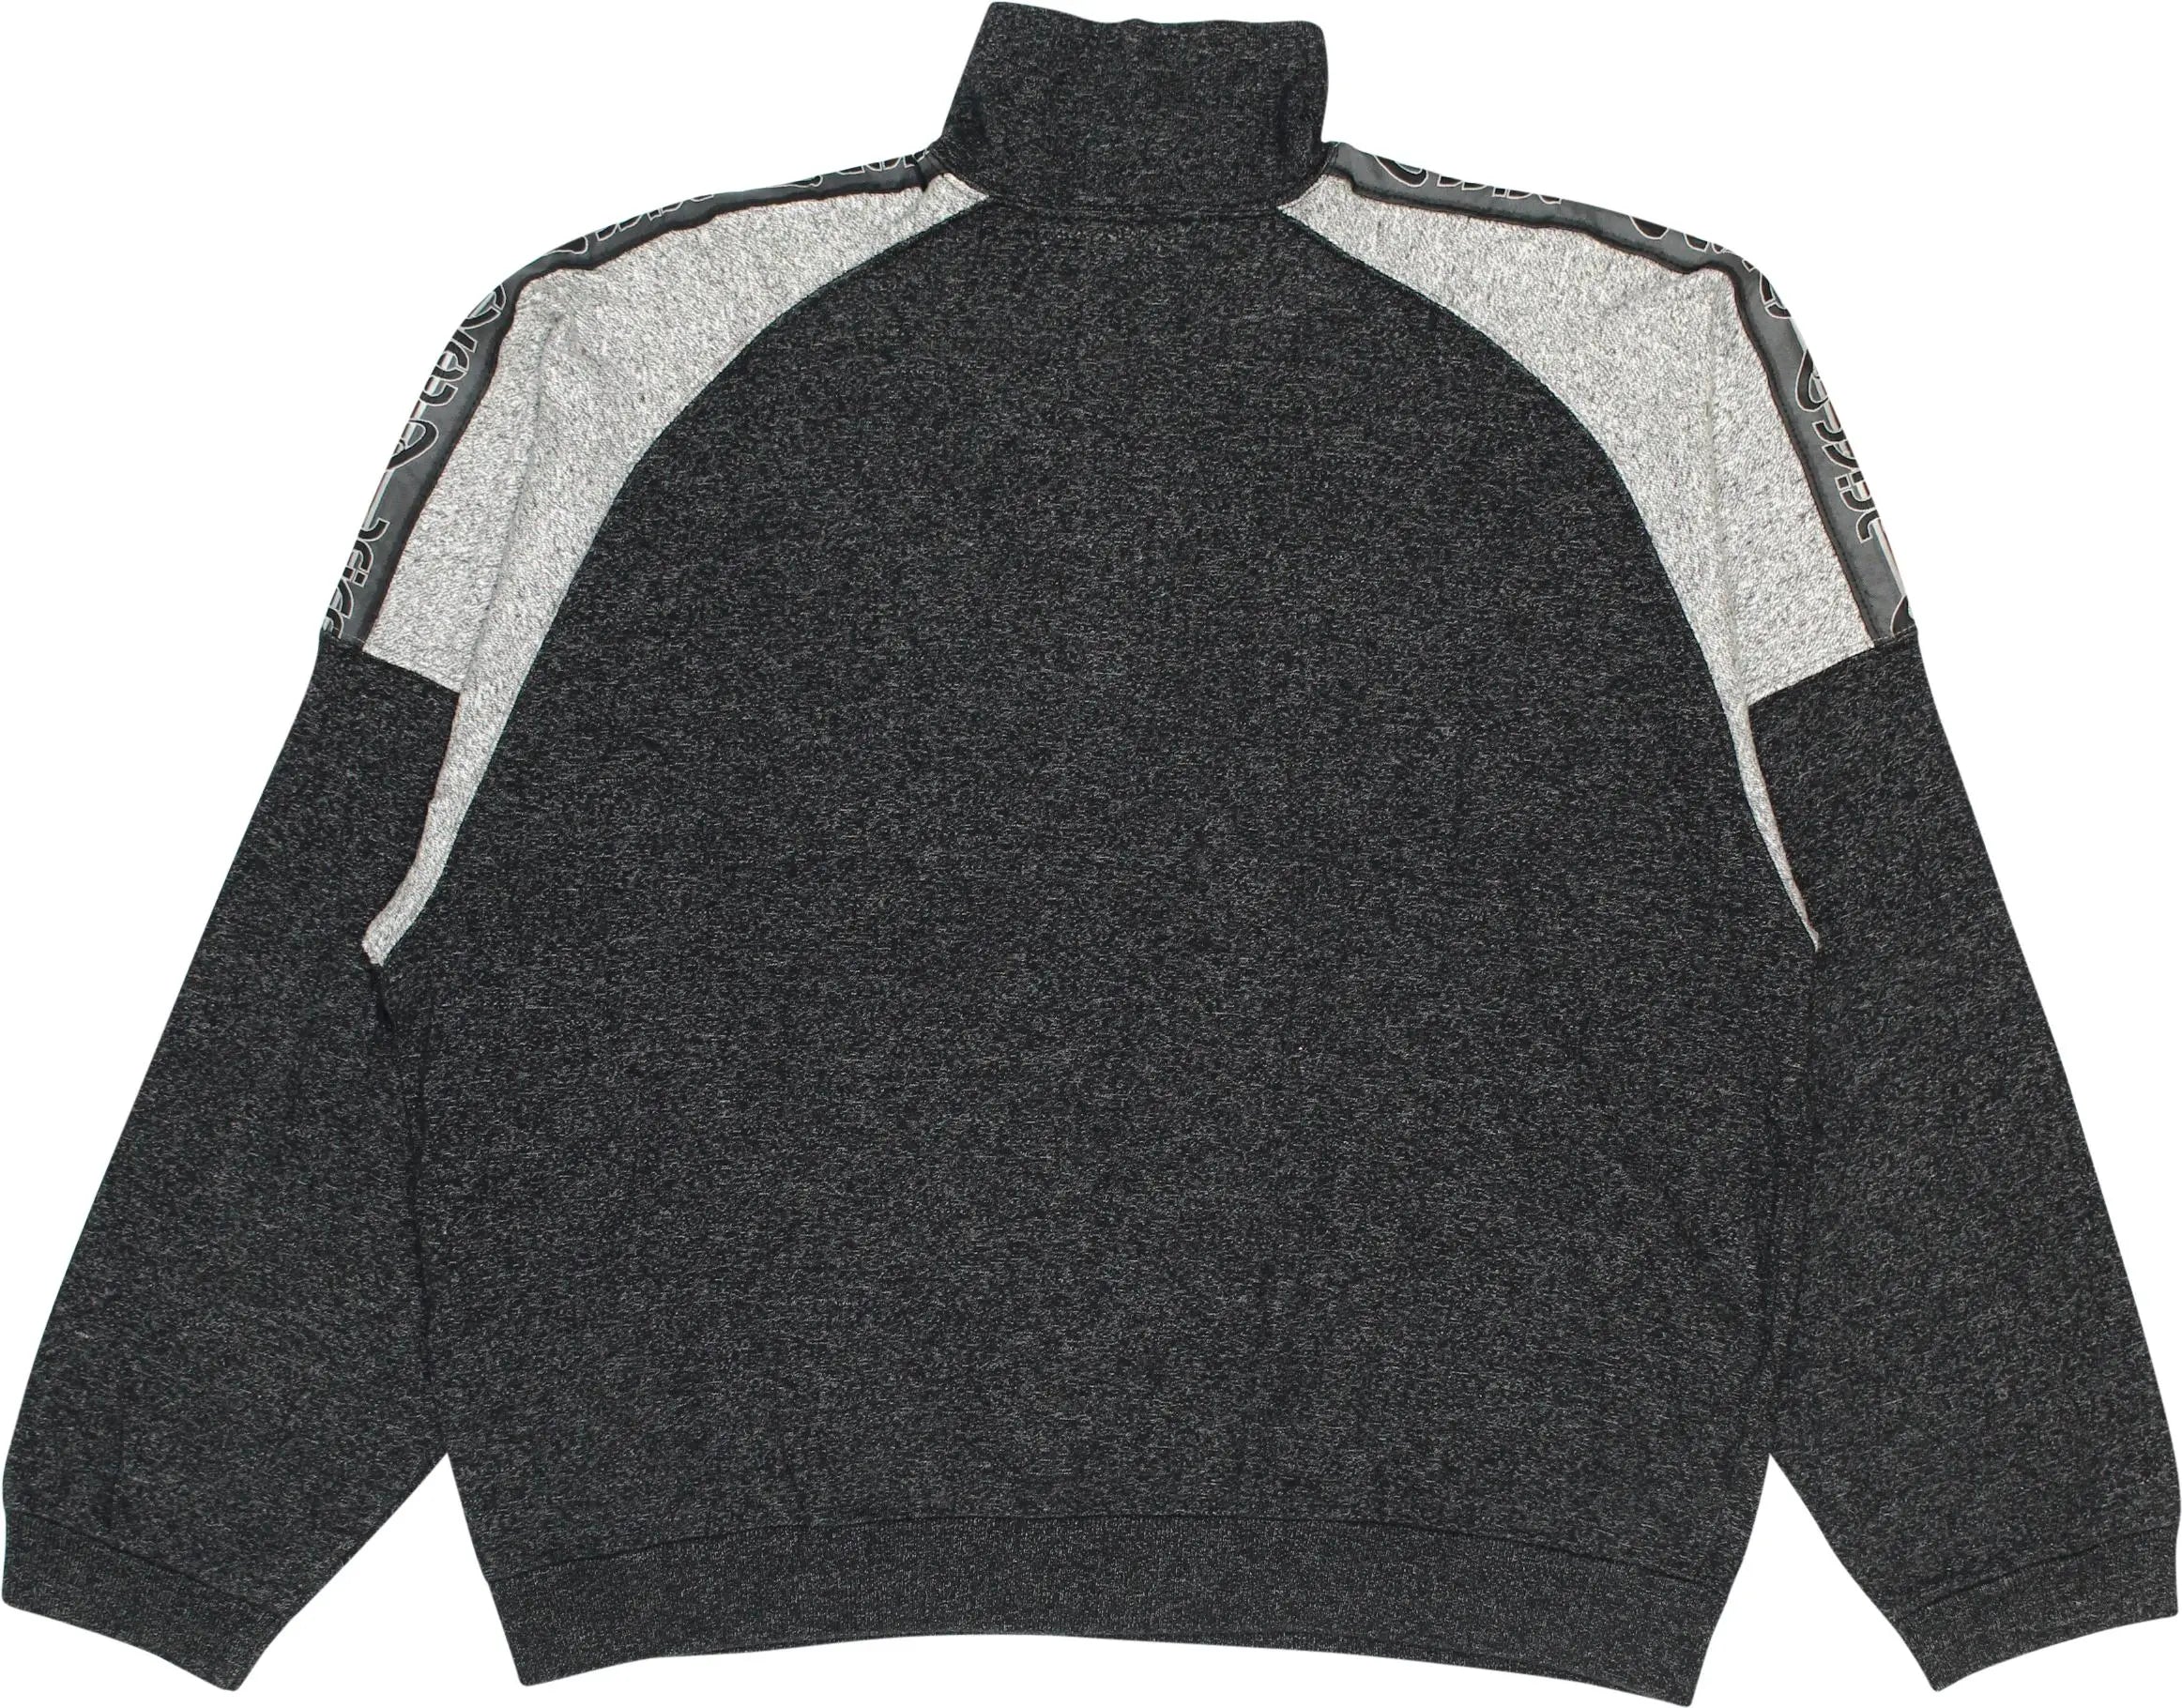 Asics - Grey Quarter Neck Zip Sweatshirt- ThriftTale.com - Vintage and second handclothing